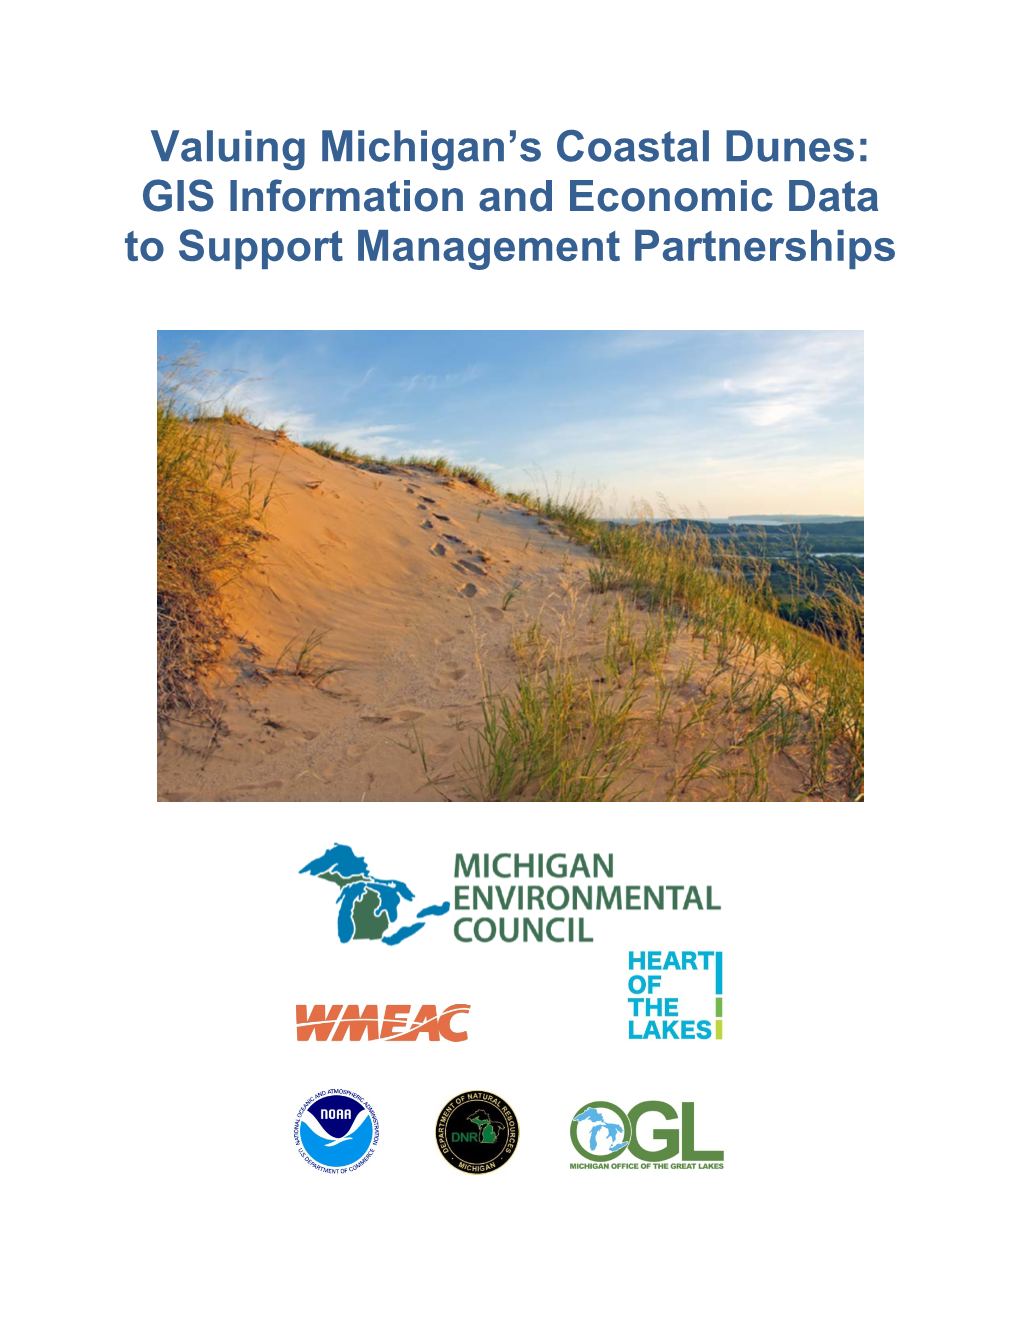 Valuing Michigan's Coastal Dunes: GIS Information and Economic Data